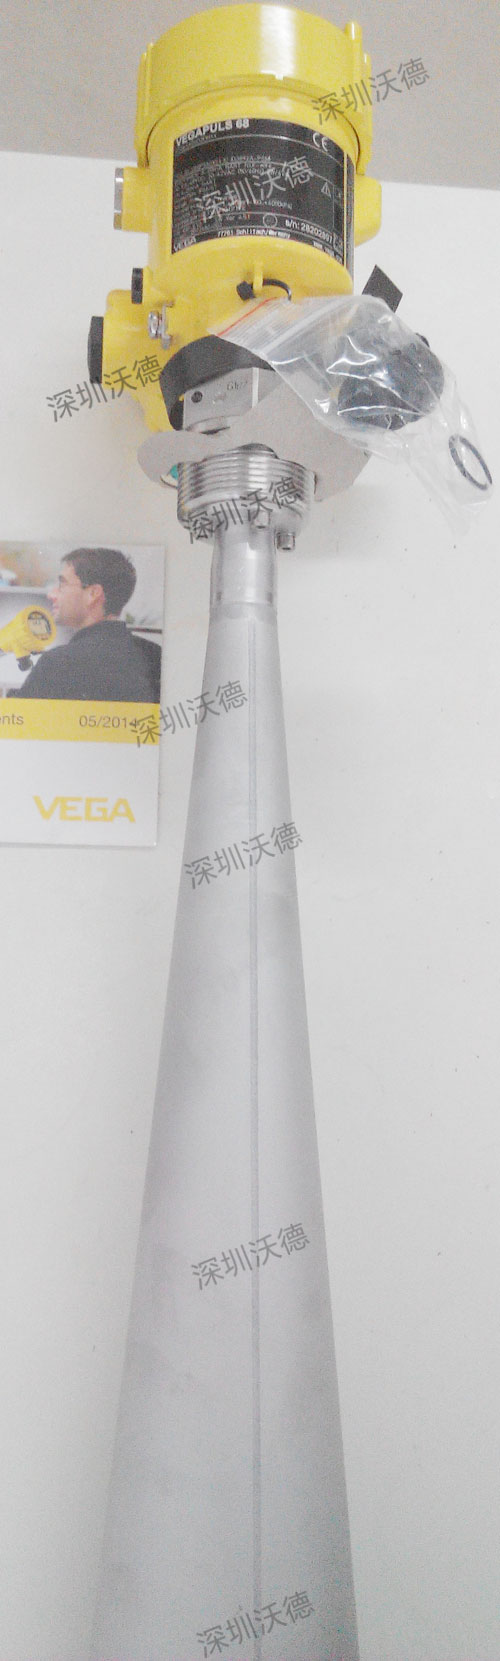 VEGA雷达物位计/测量仪PS68.XXEGD2IDMXX(VEGAPULS 68系列)出货